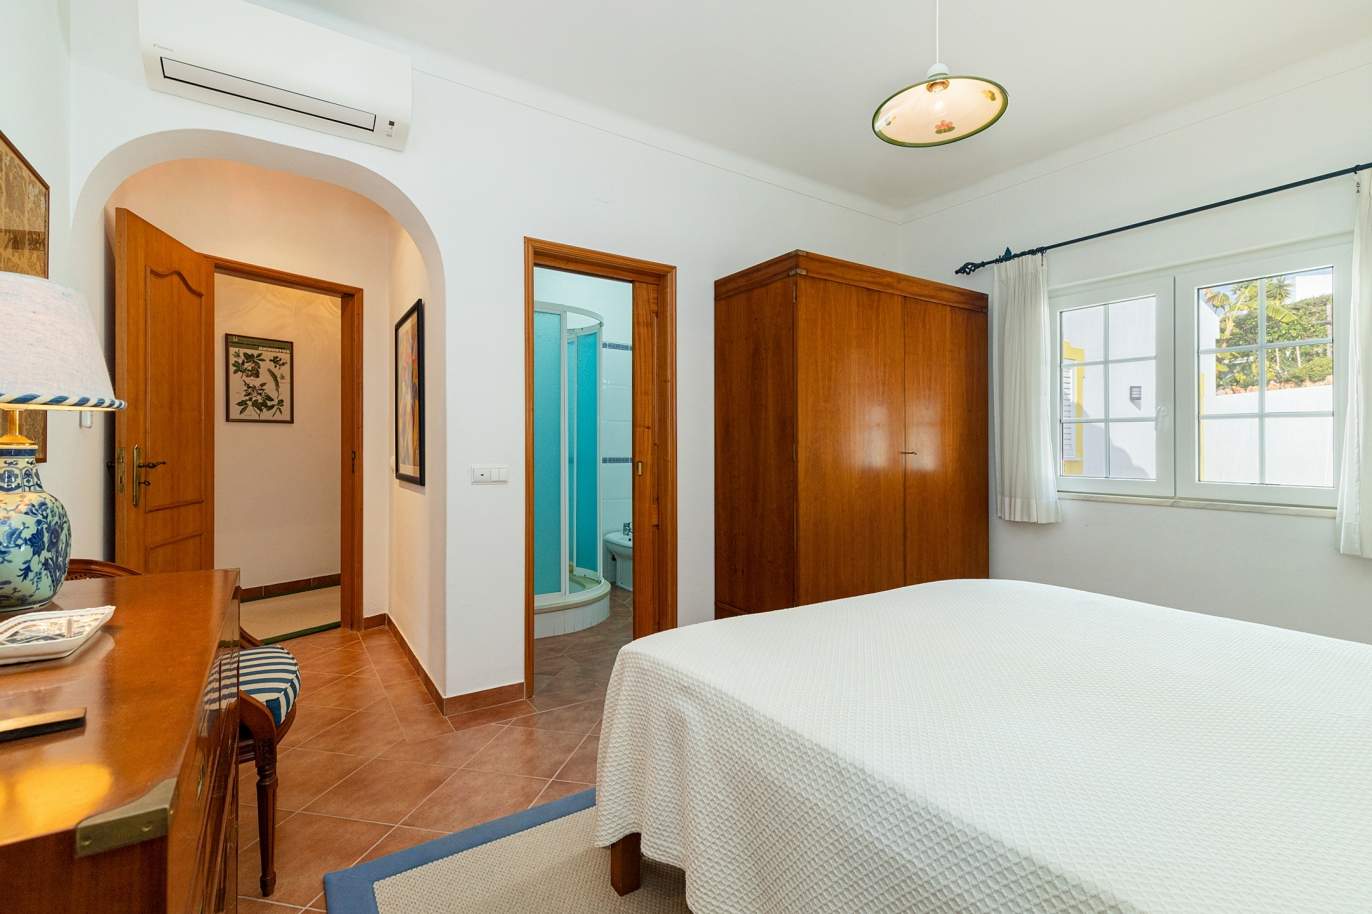 5 Bedroom Villa, near the beach, for sale in Carvoeiro, Algarve_191907